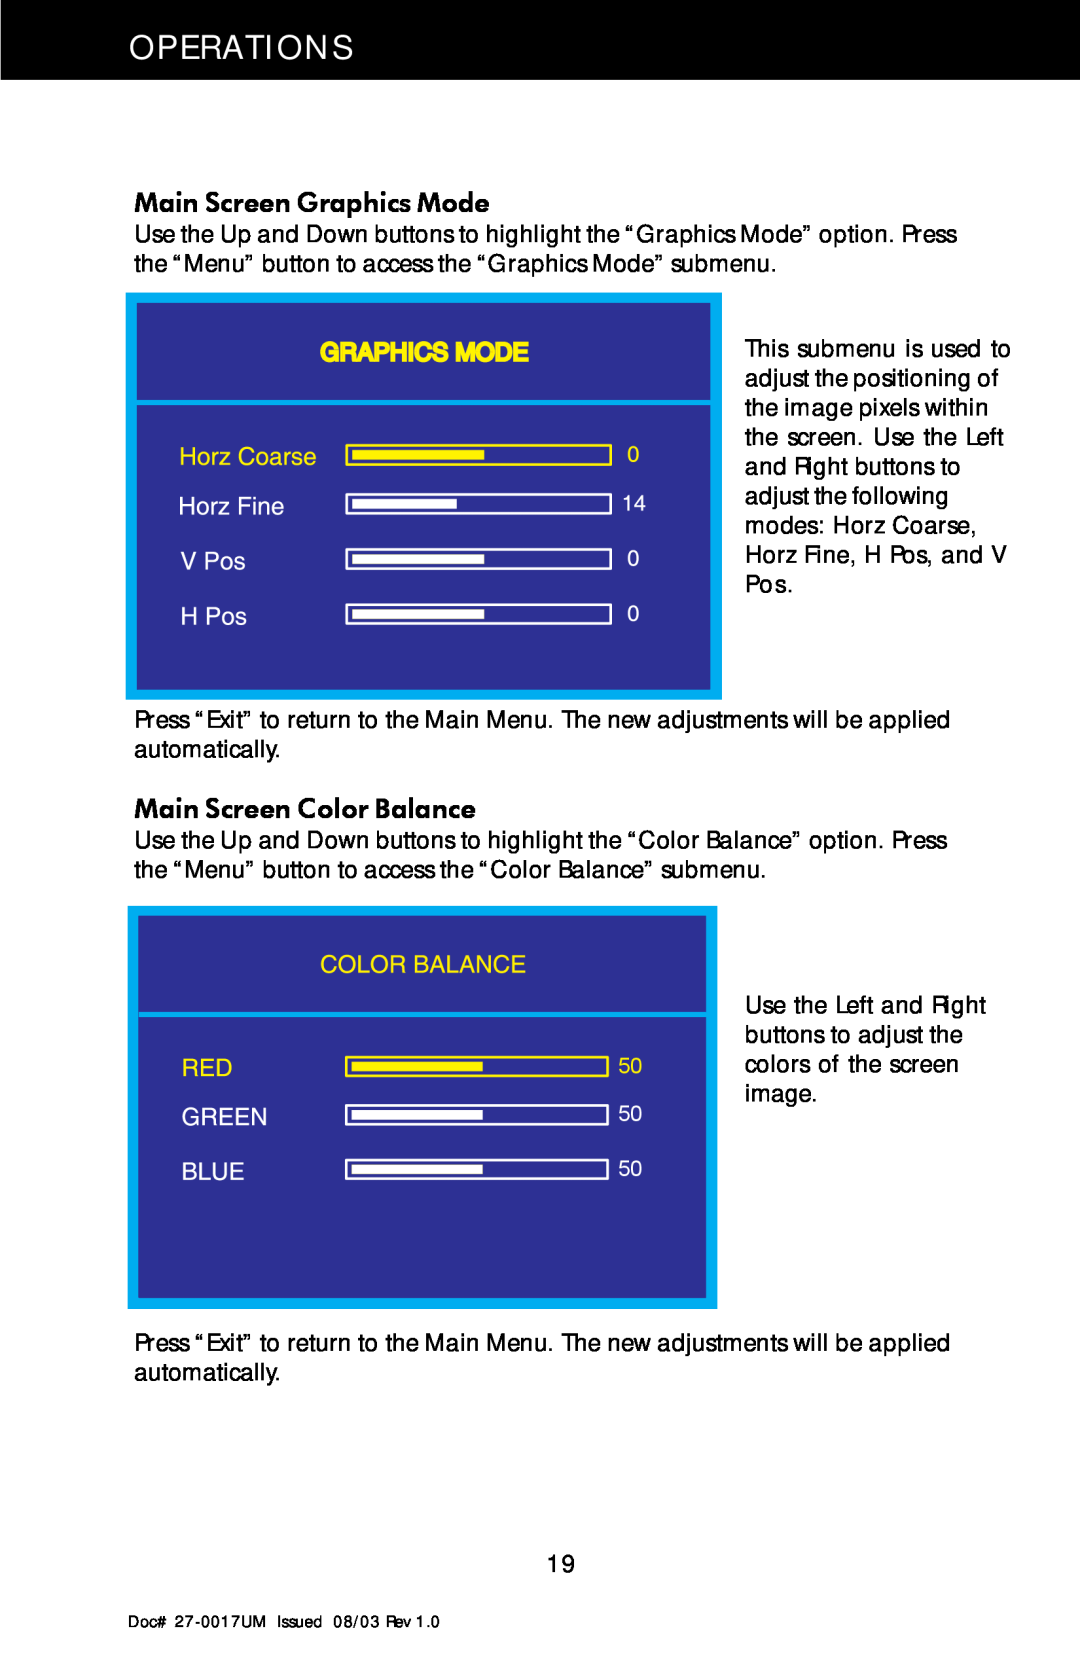 Z Microsystems 21 manual Main Screen Graphics Mode, Main Screen Color Balance, Operations 